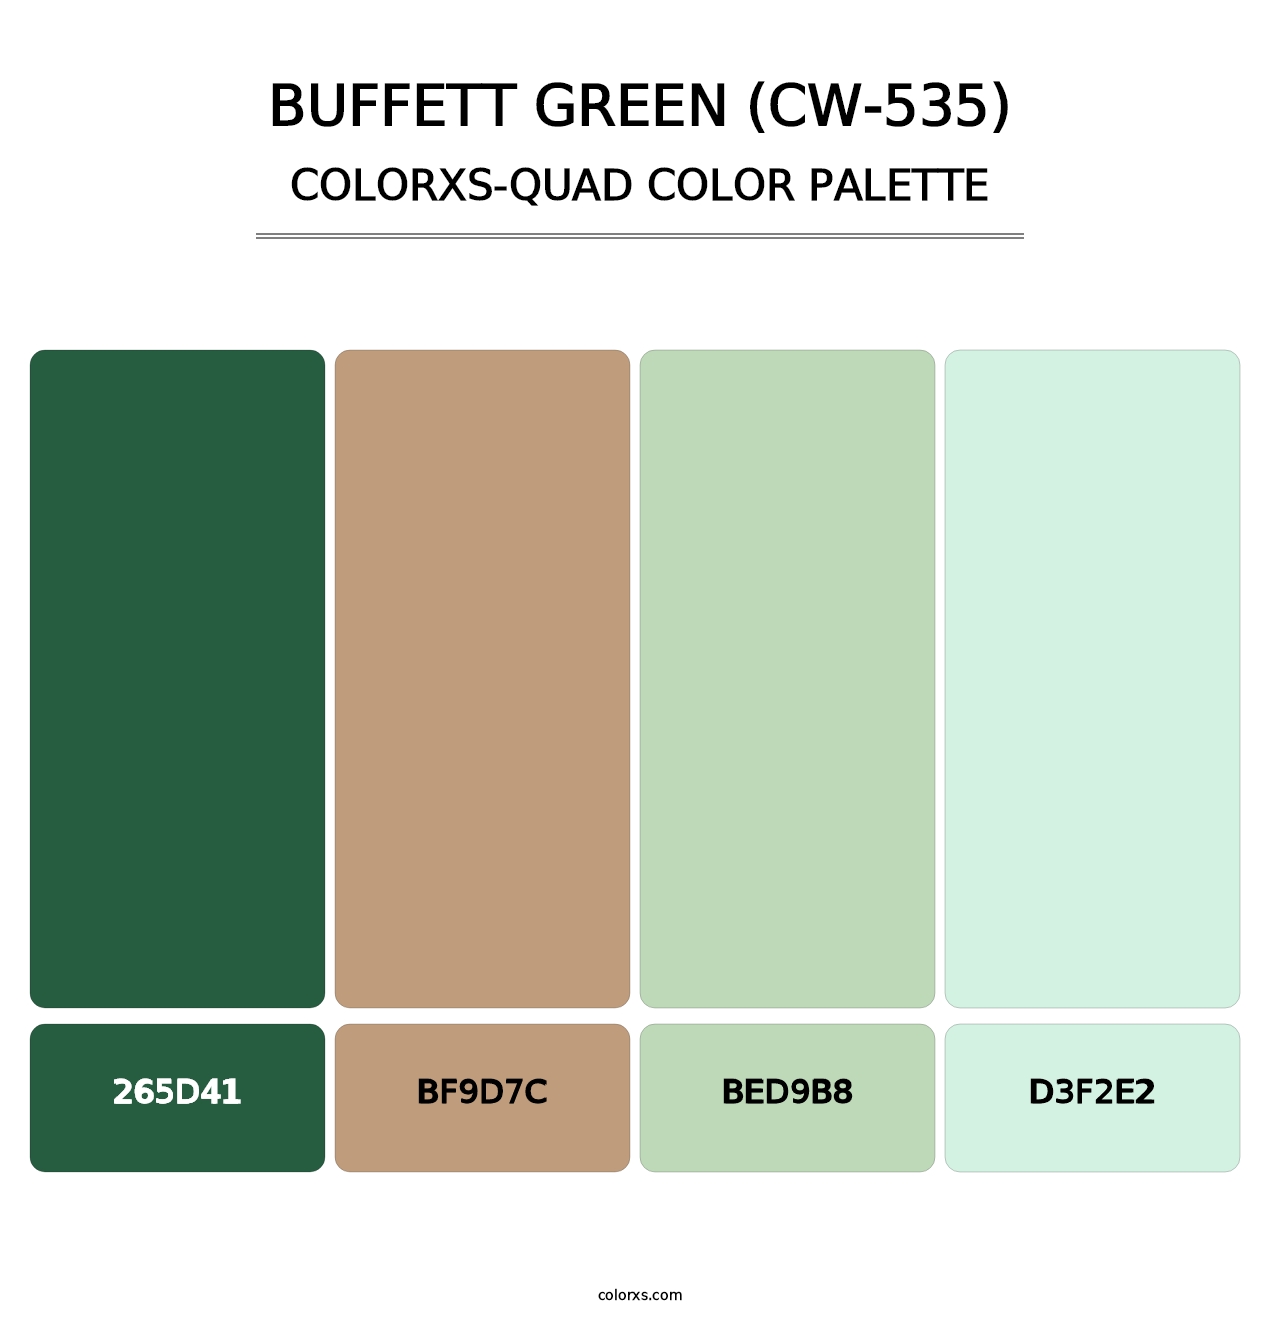 Buffett Green (CW-535) - Colorxs Quad Palette